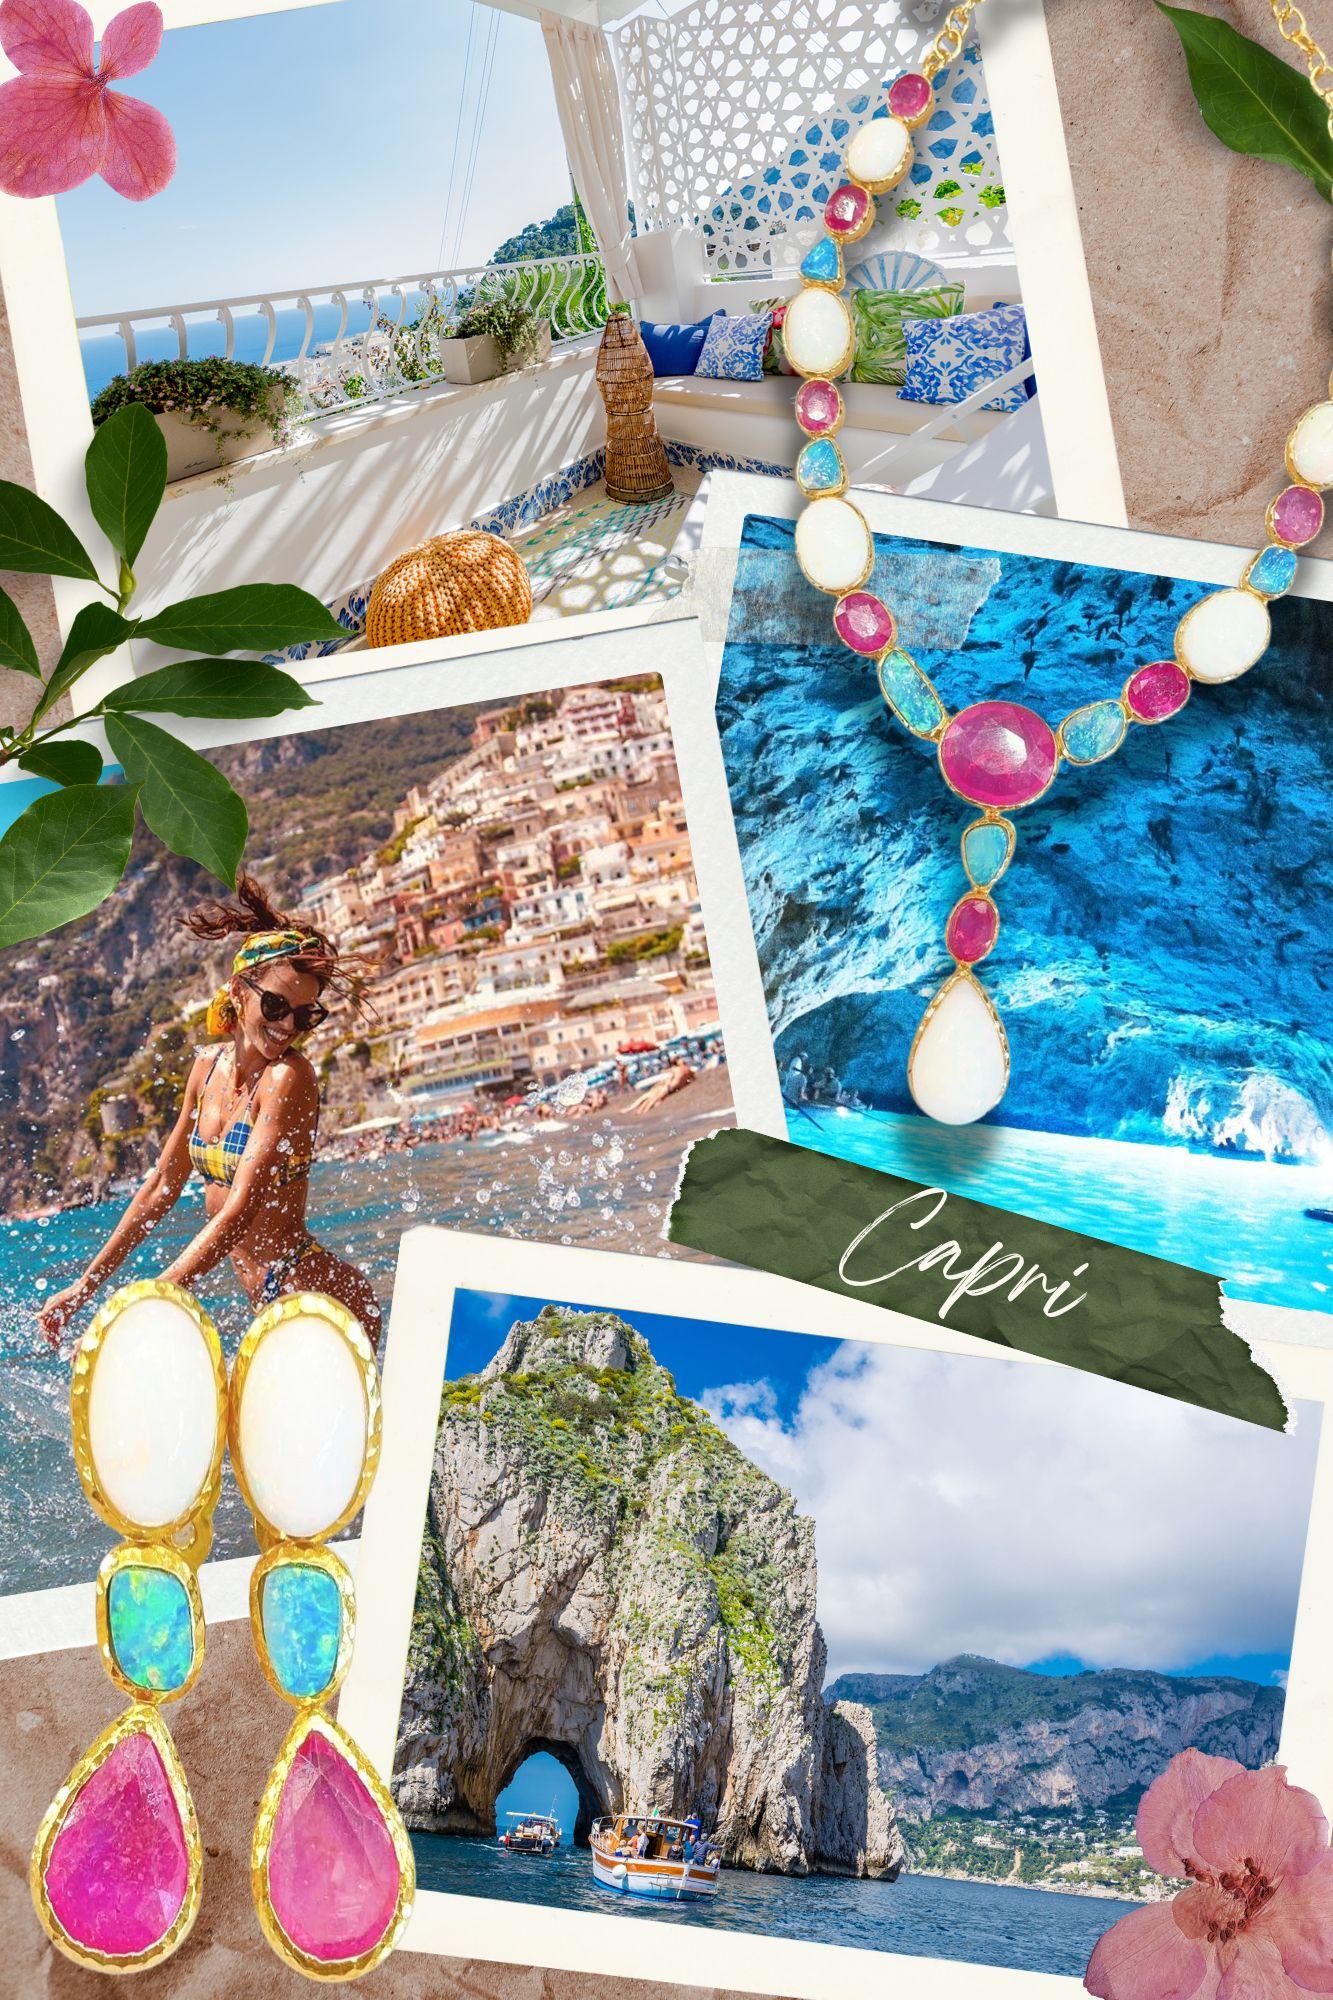 Cabochon Bochic “Capri” Blue Fire Opal, White Ethiopian Opal & Ruby Brooch, 22k Gold & Si